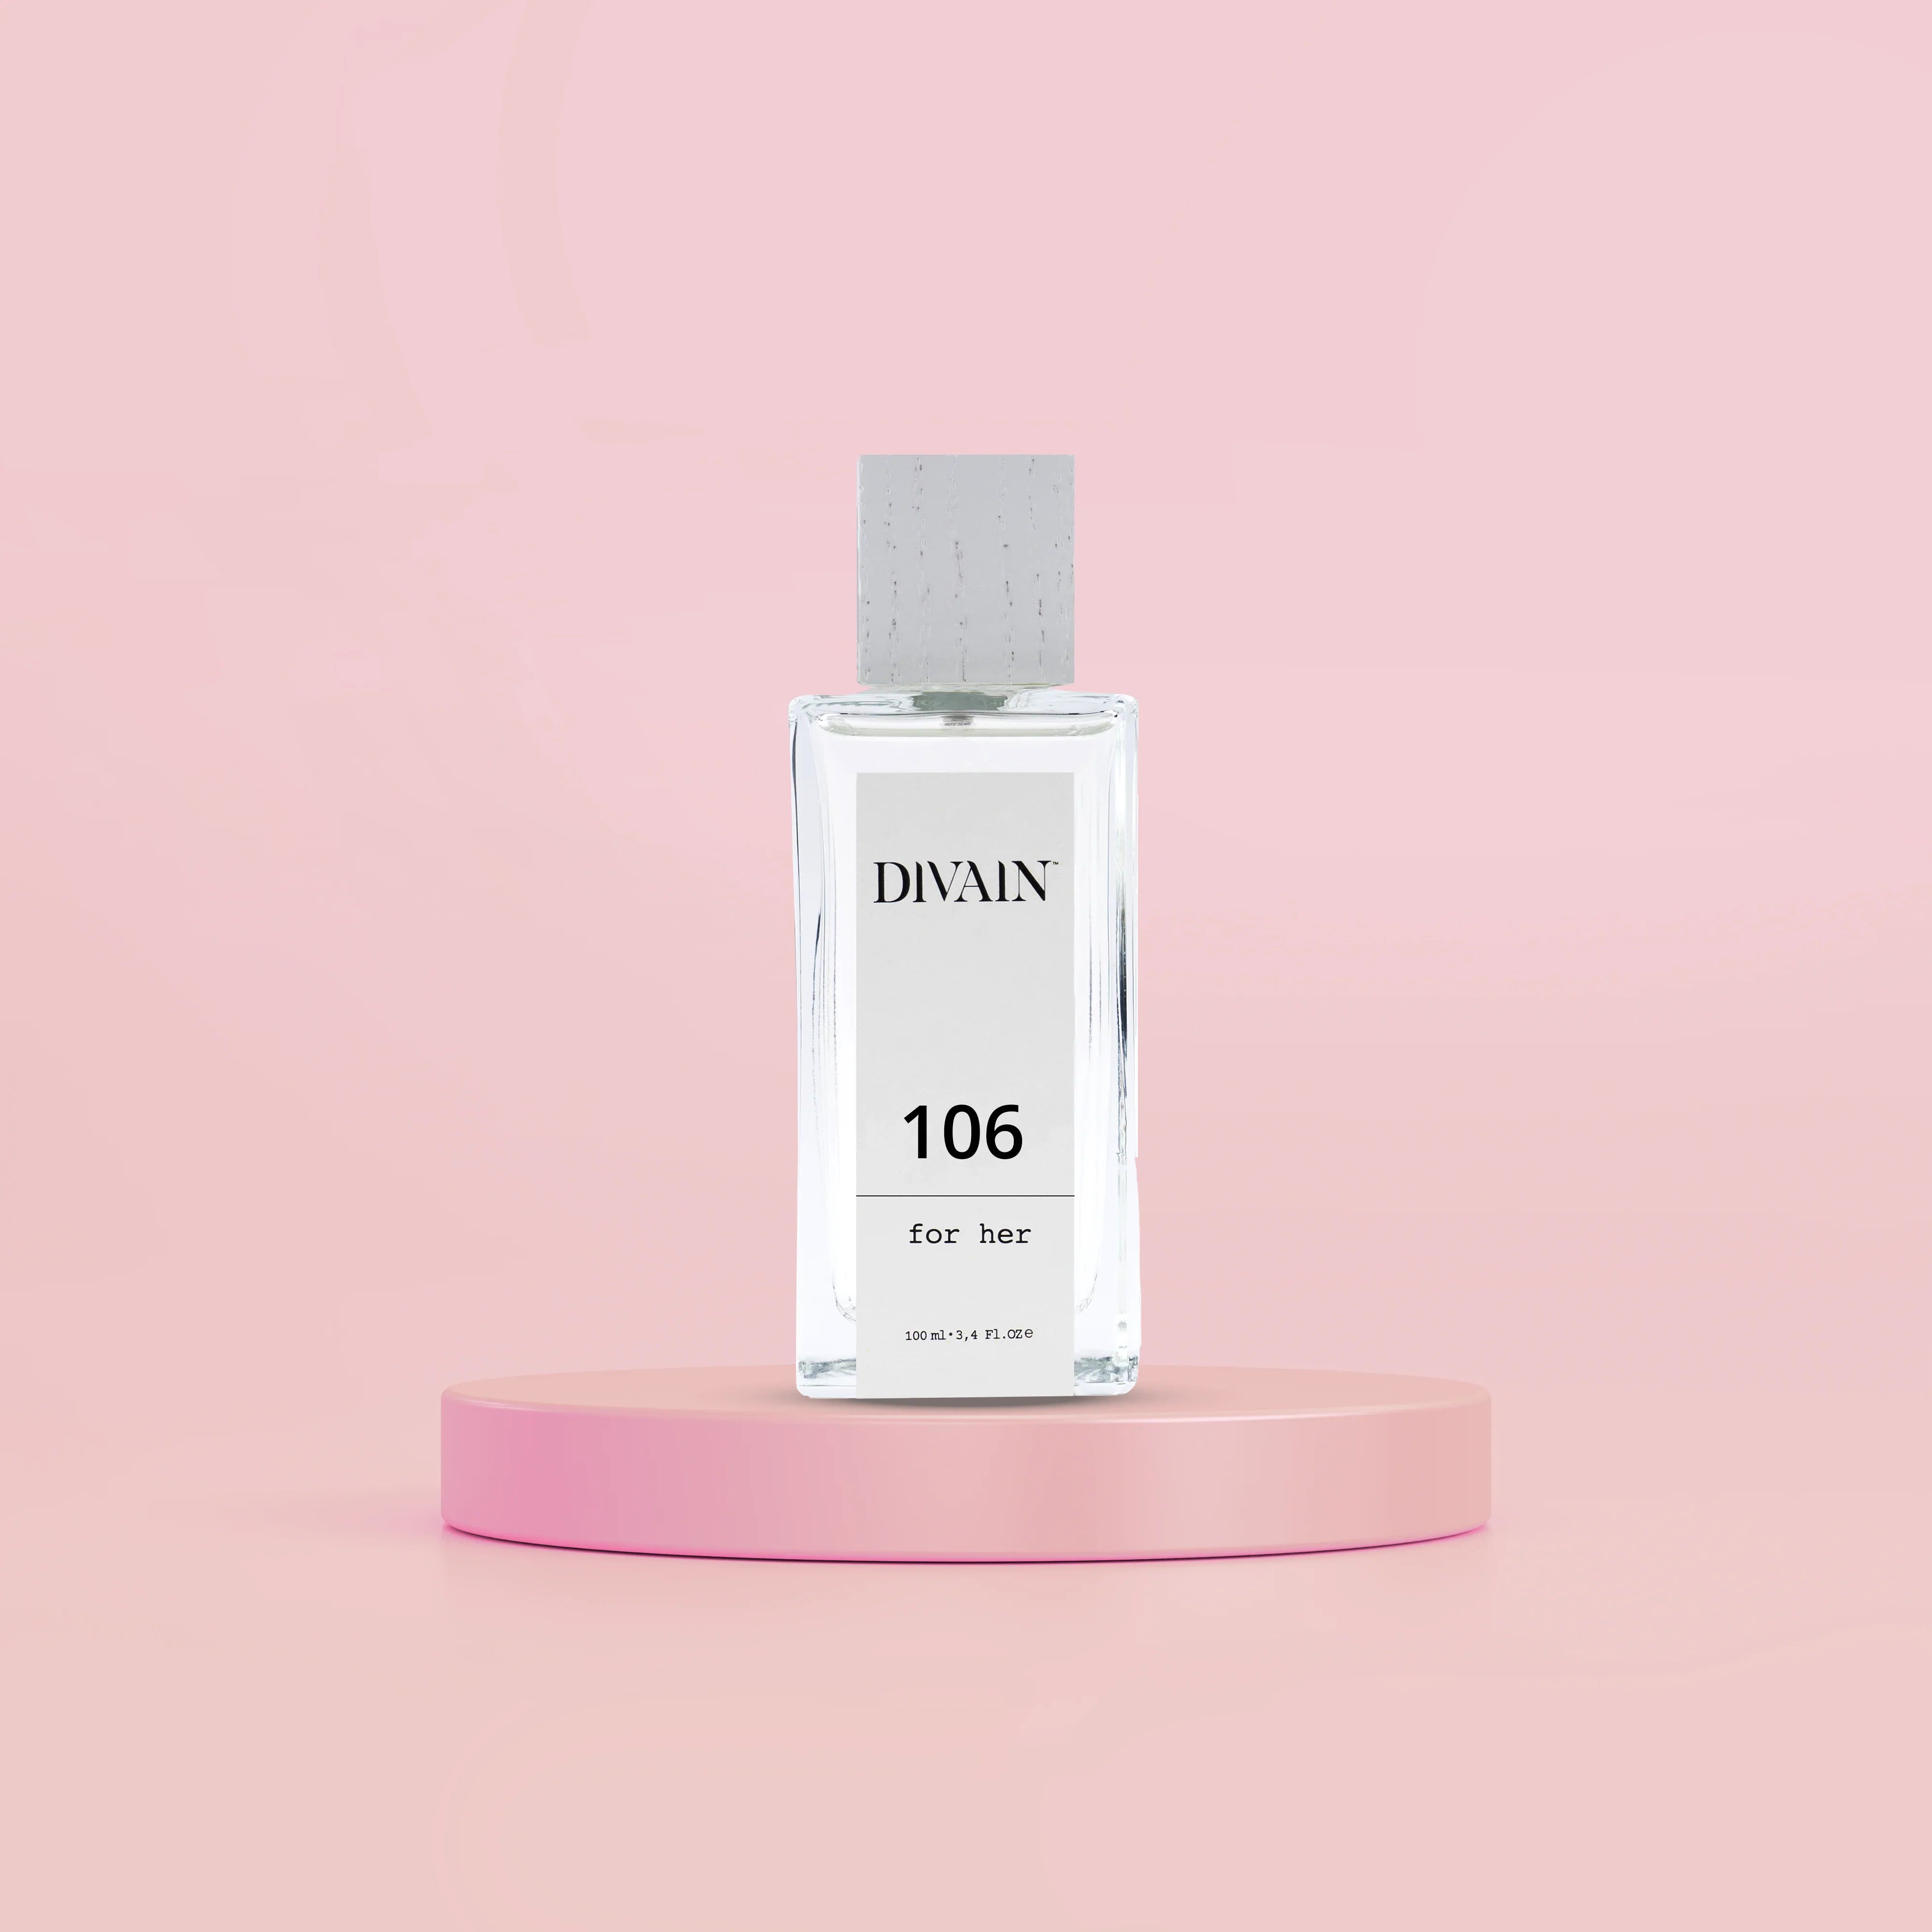 DIVAIN-106 | Similar a Chanel Nº5 EDP de Chanel | Mujer